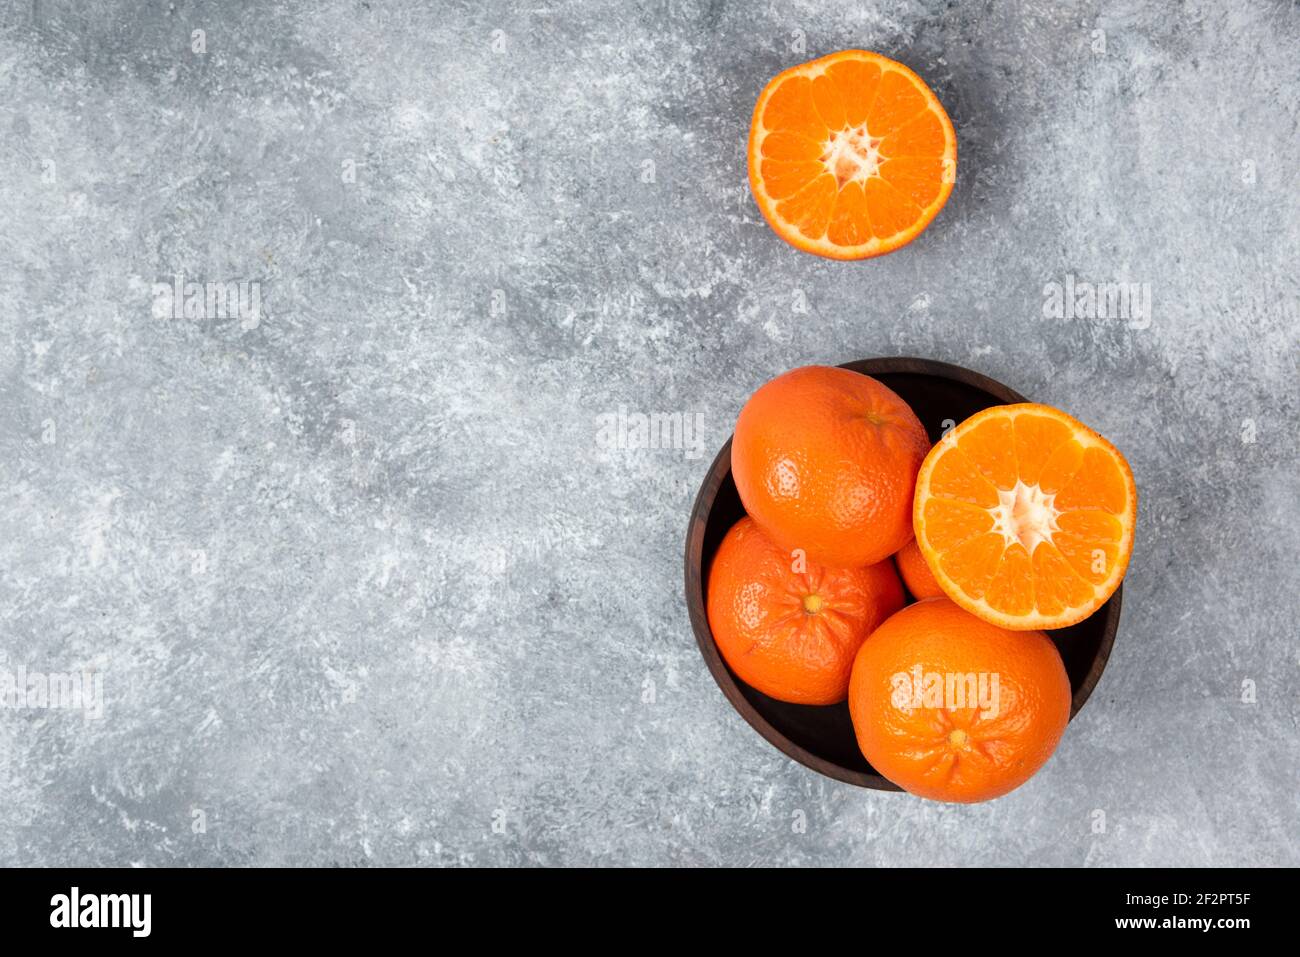 A wooden bowl full of juicy orange fruits on stone background Stock Photo